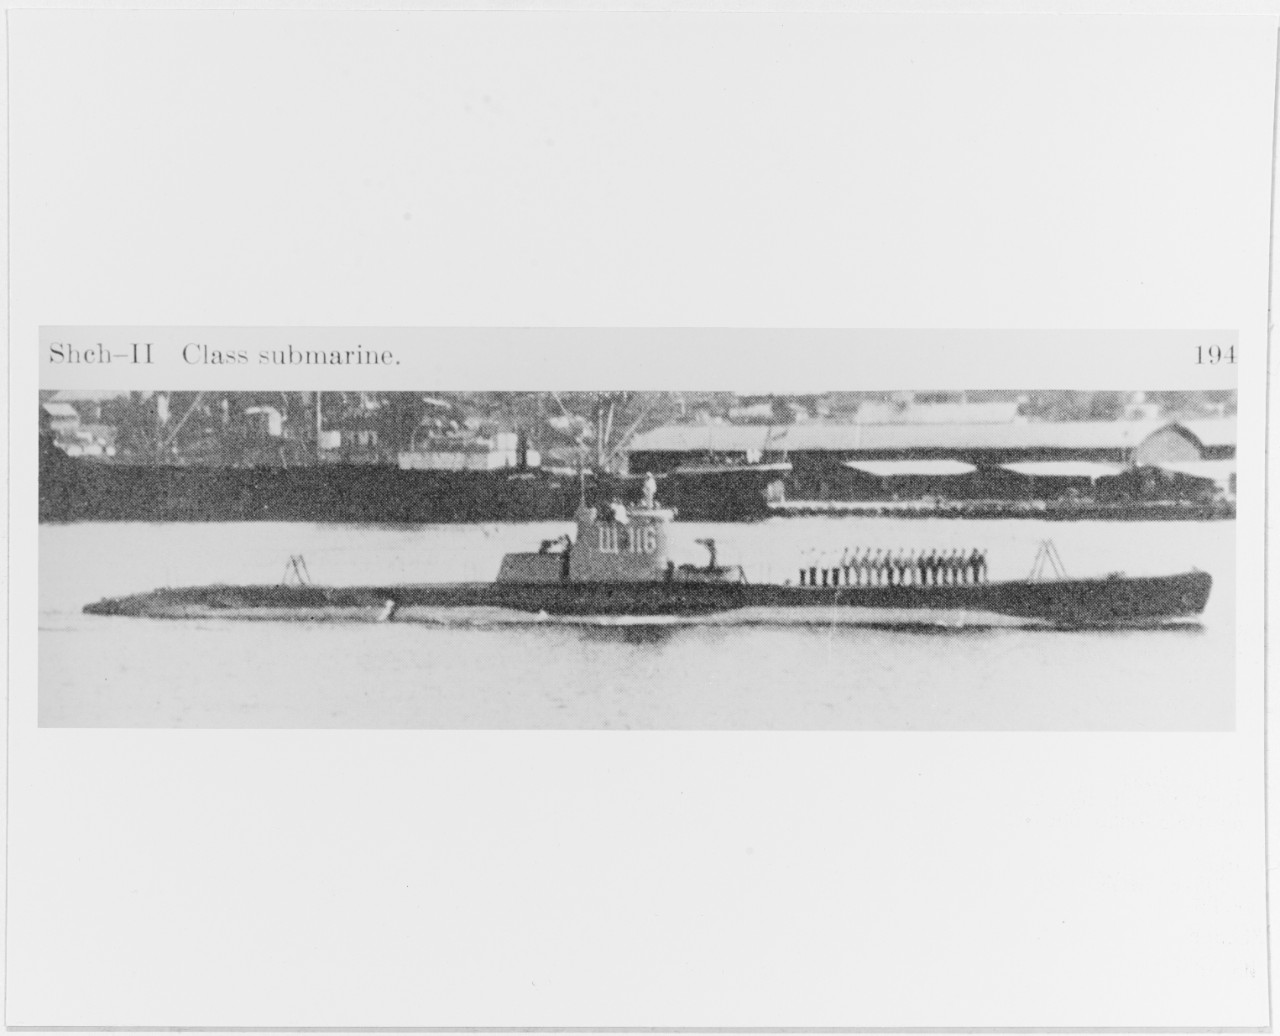 SHCH-116 (Soviet submarine, 1934)